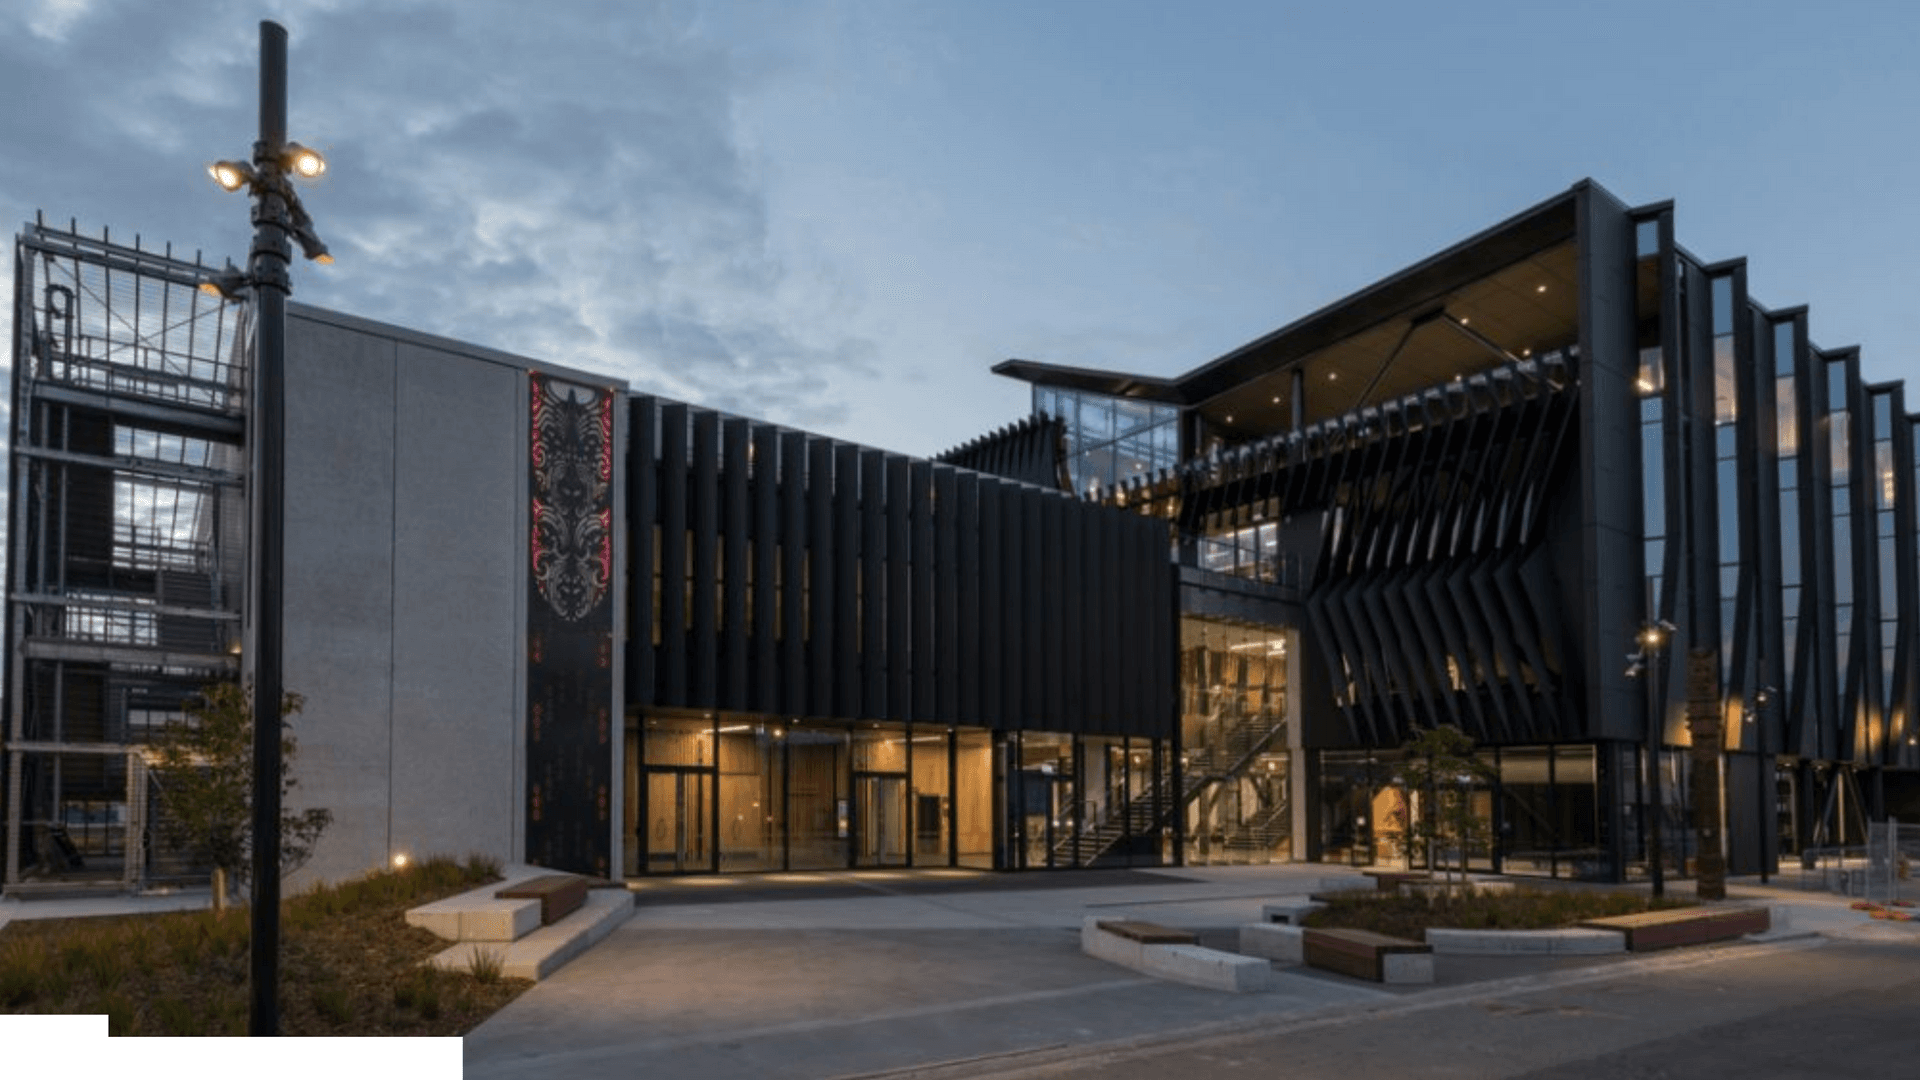 The University of Waikato